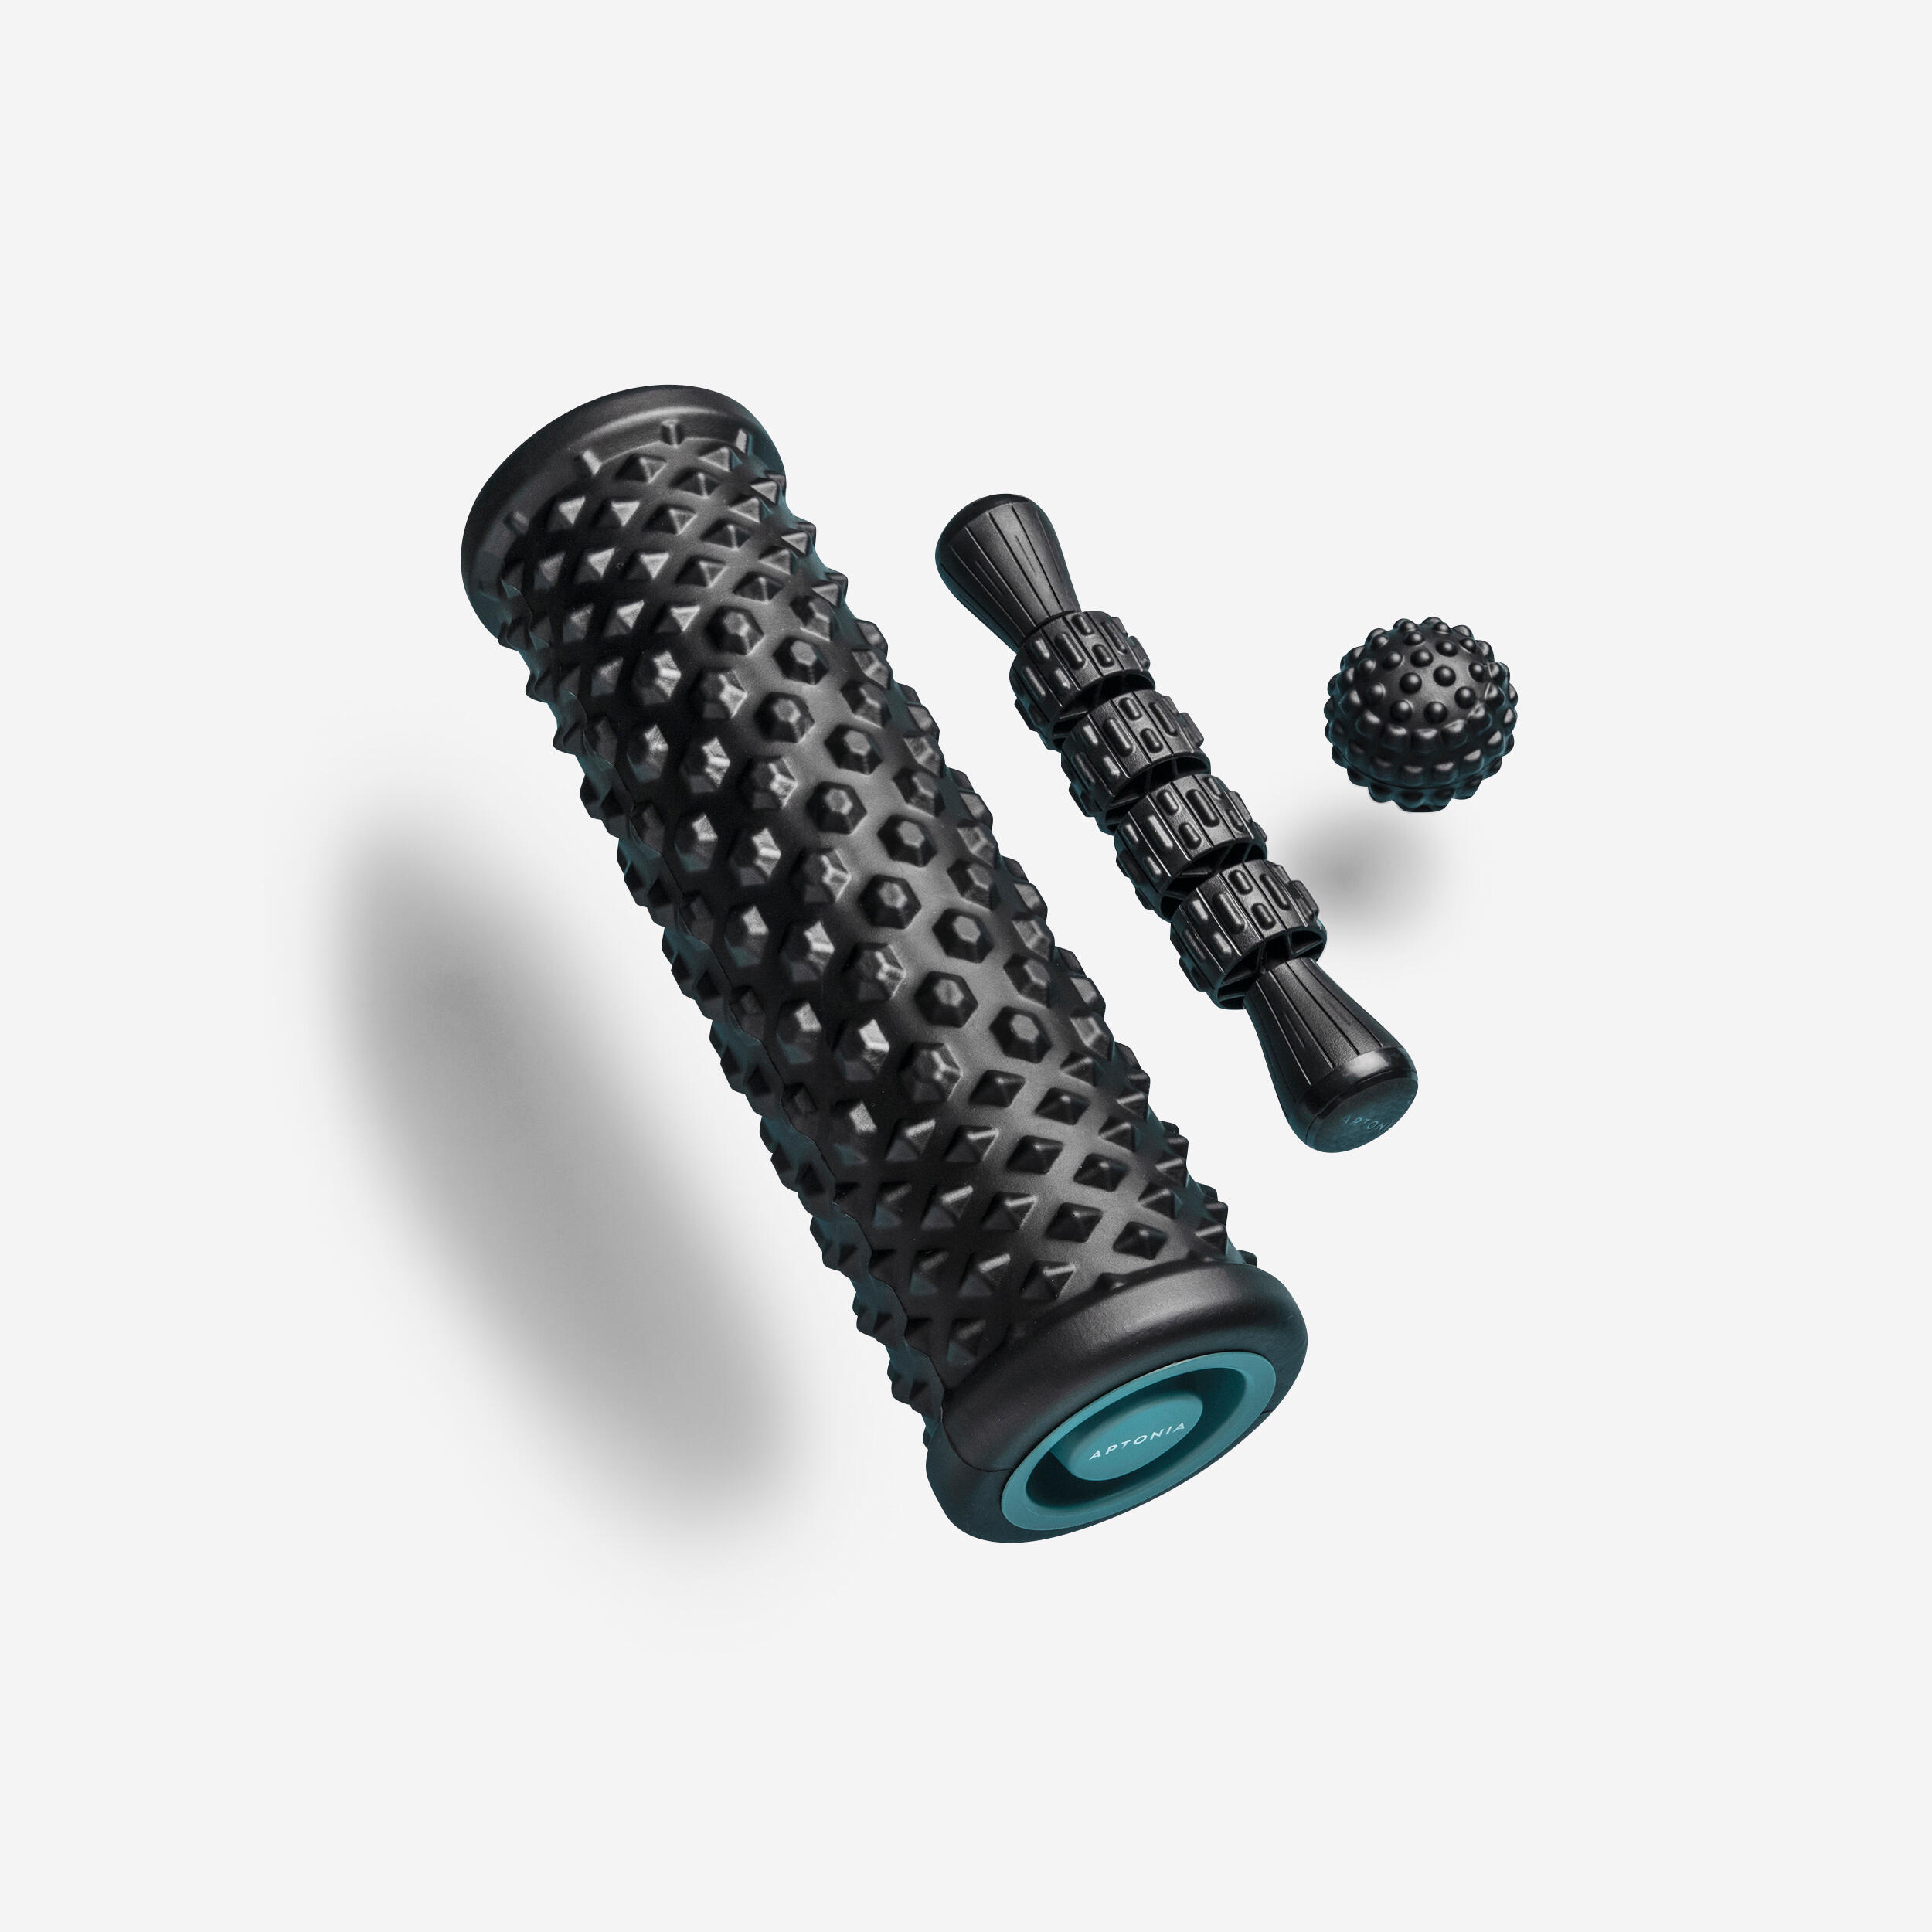 DECATHLON Massage Kit: Massage roller, ball and stick